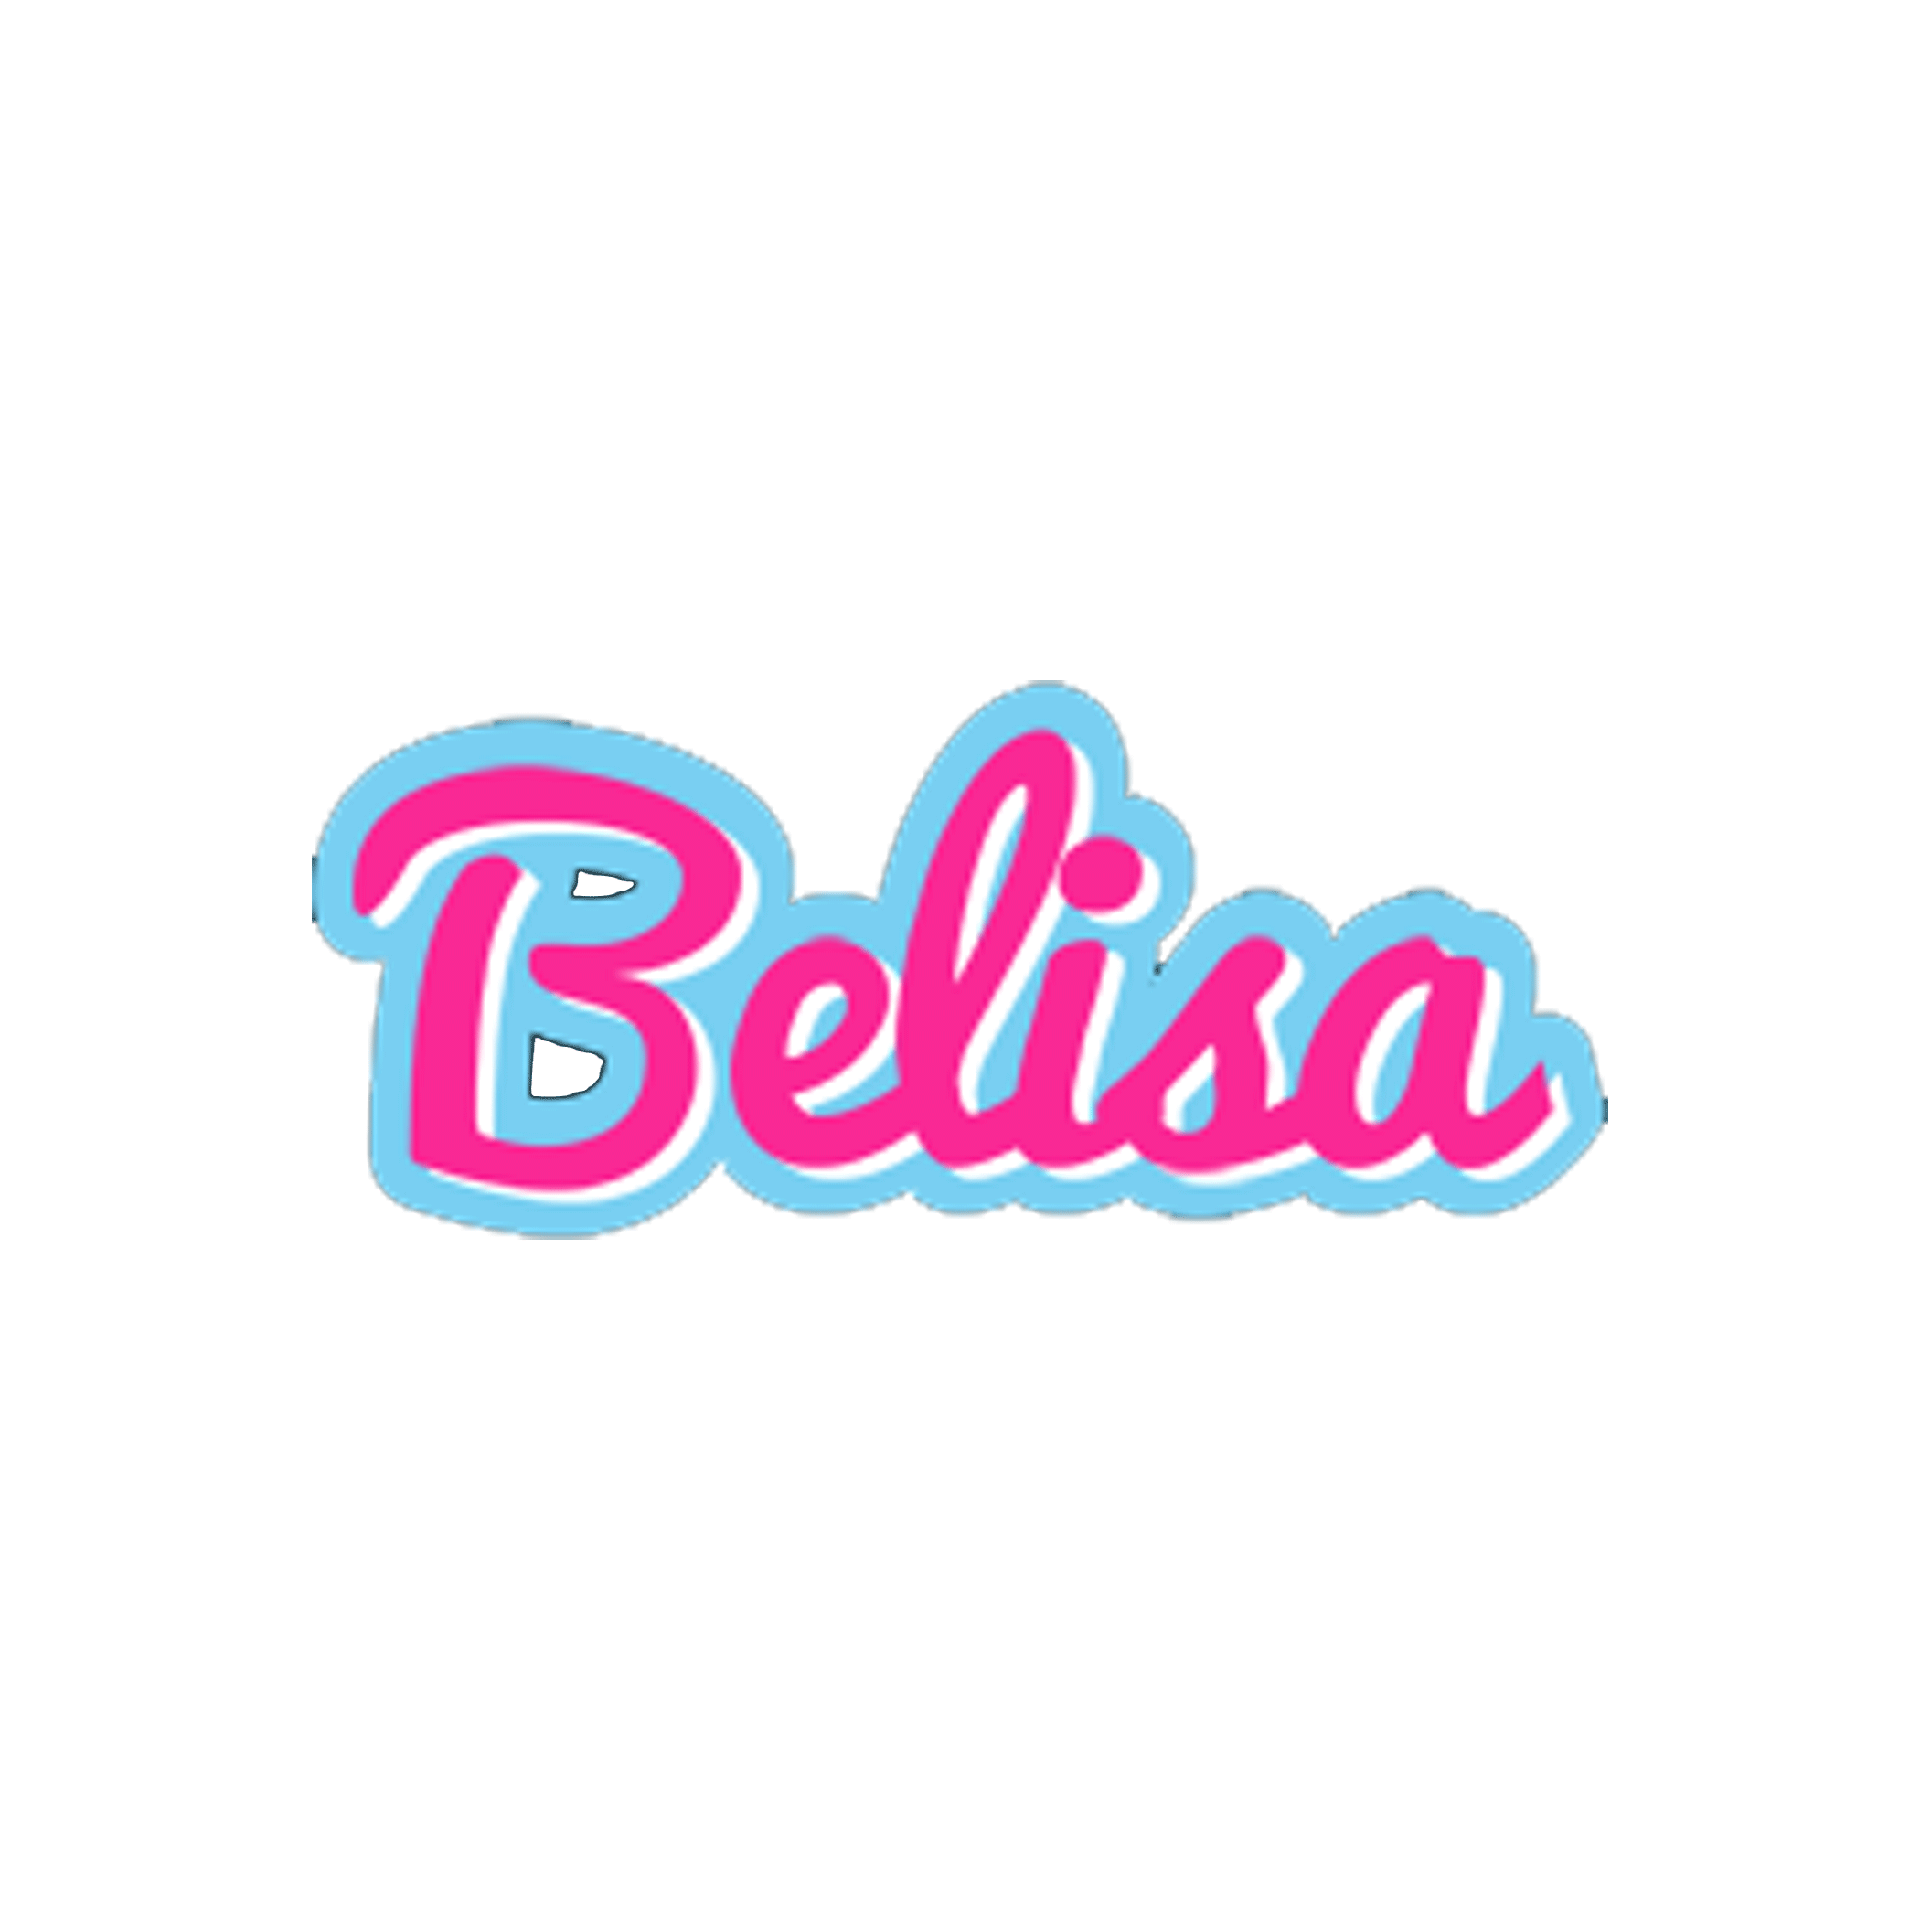 Product Brand: Beilisa